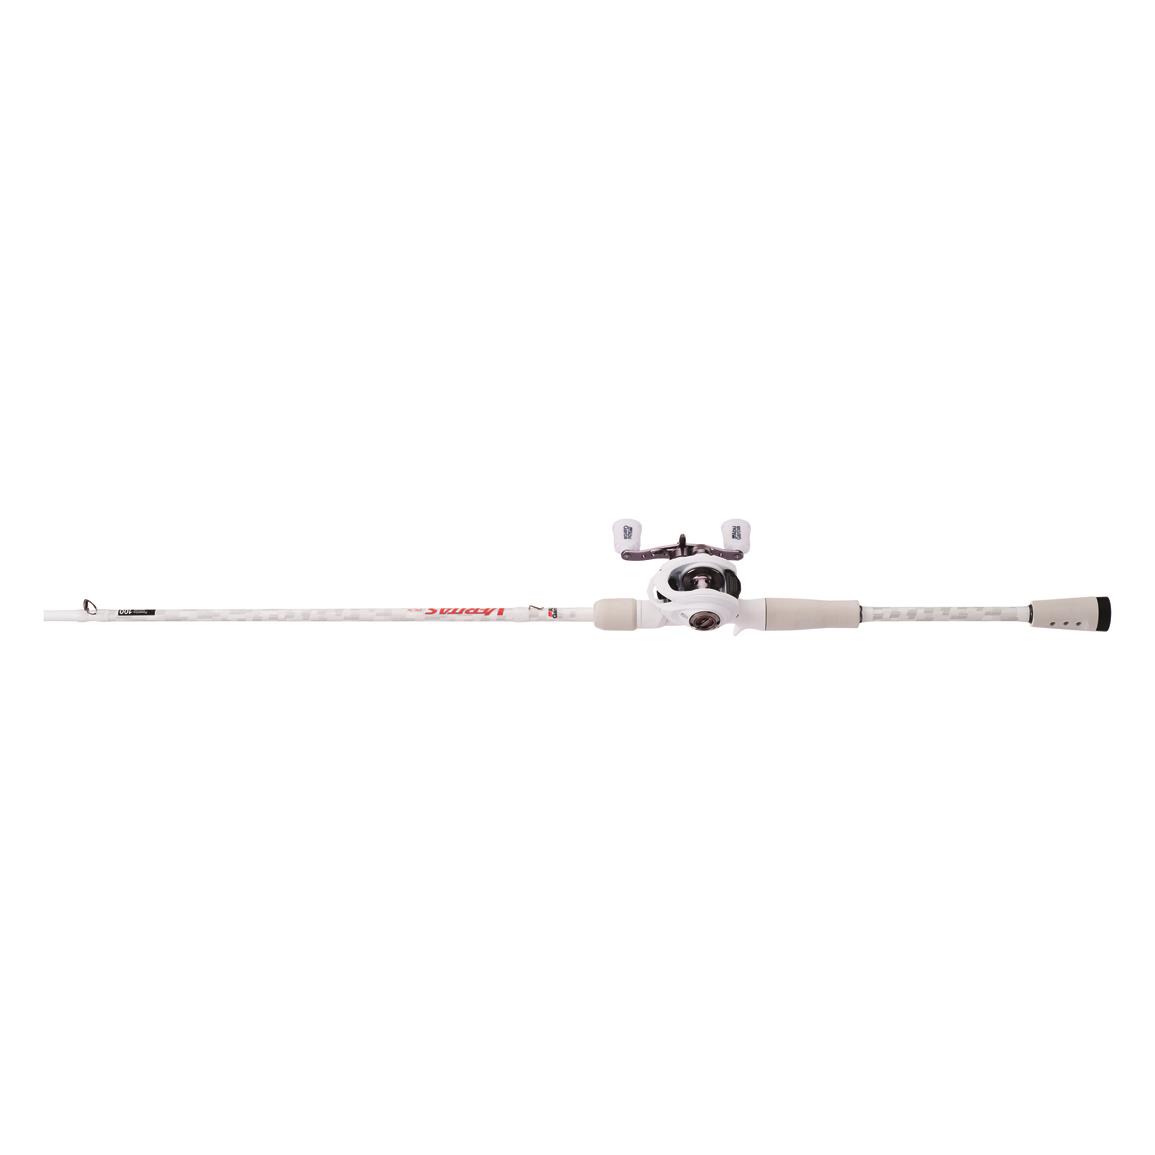 Abu Garcia Baitcast Combo Medium Power Fishing Rod & Reel Combos for sale